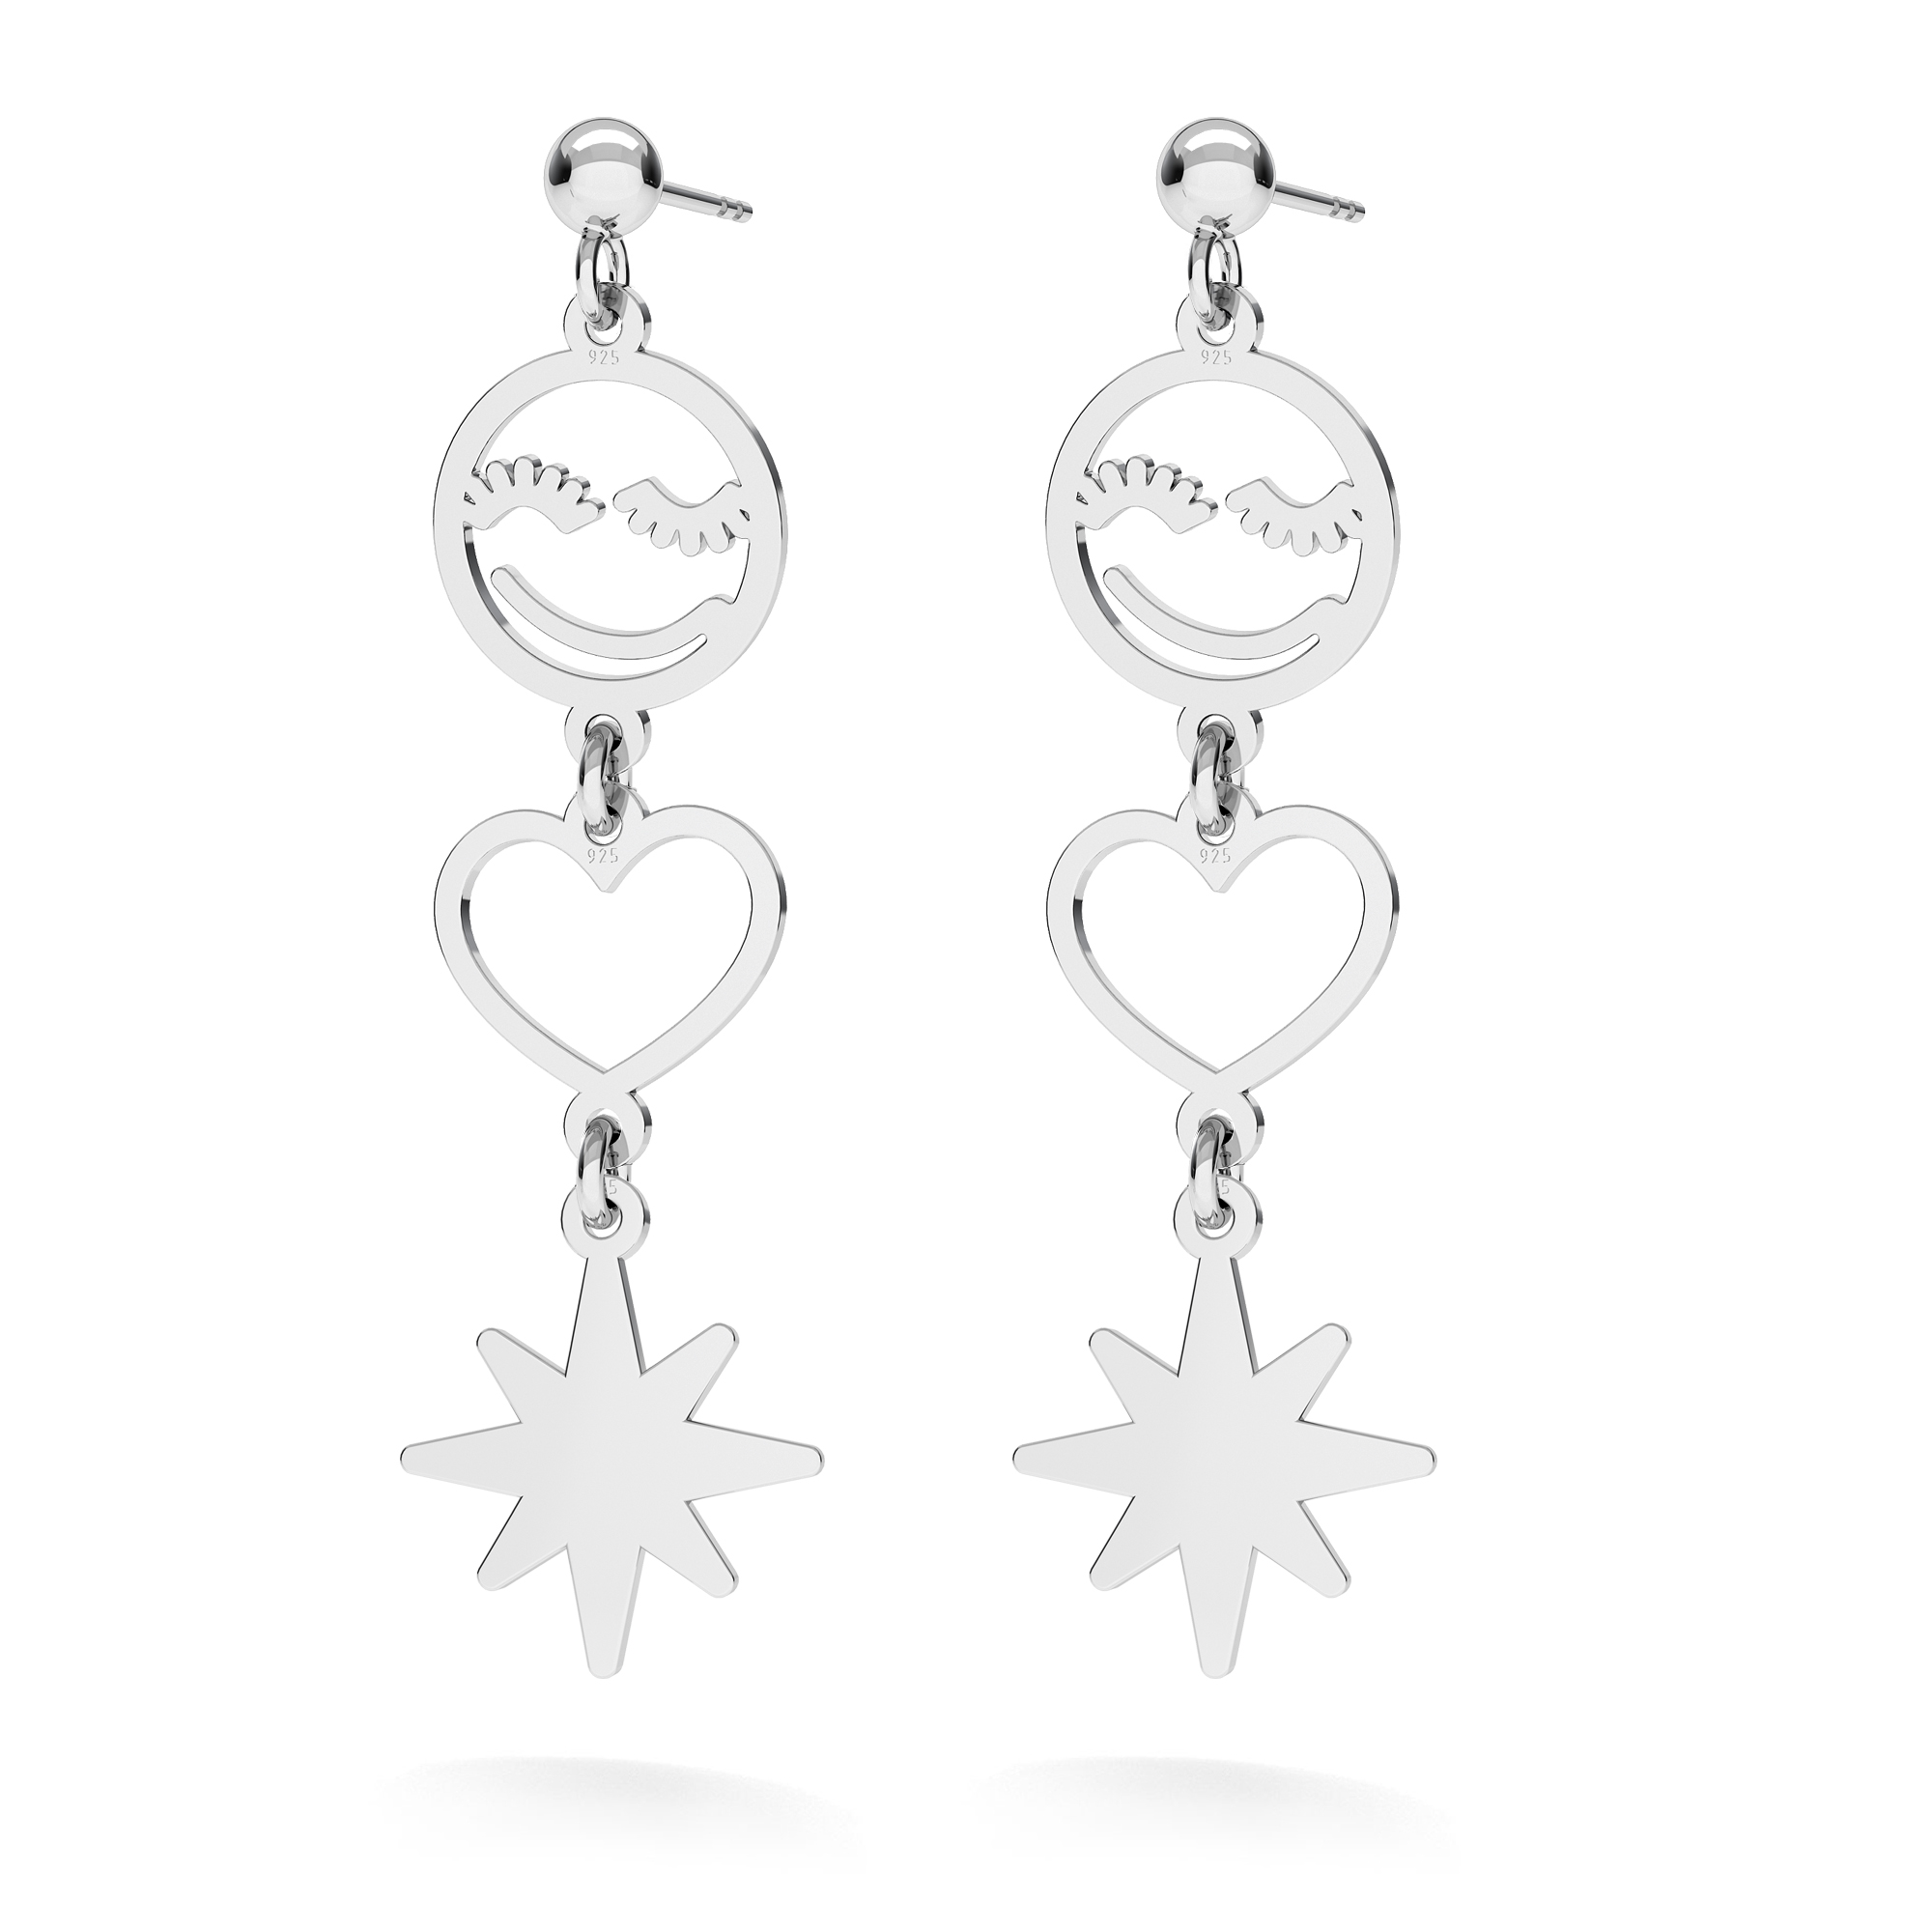 SMILE HEART STAR earrings sterling silver 925